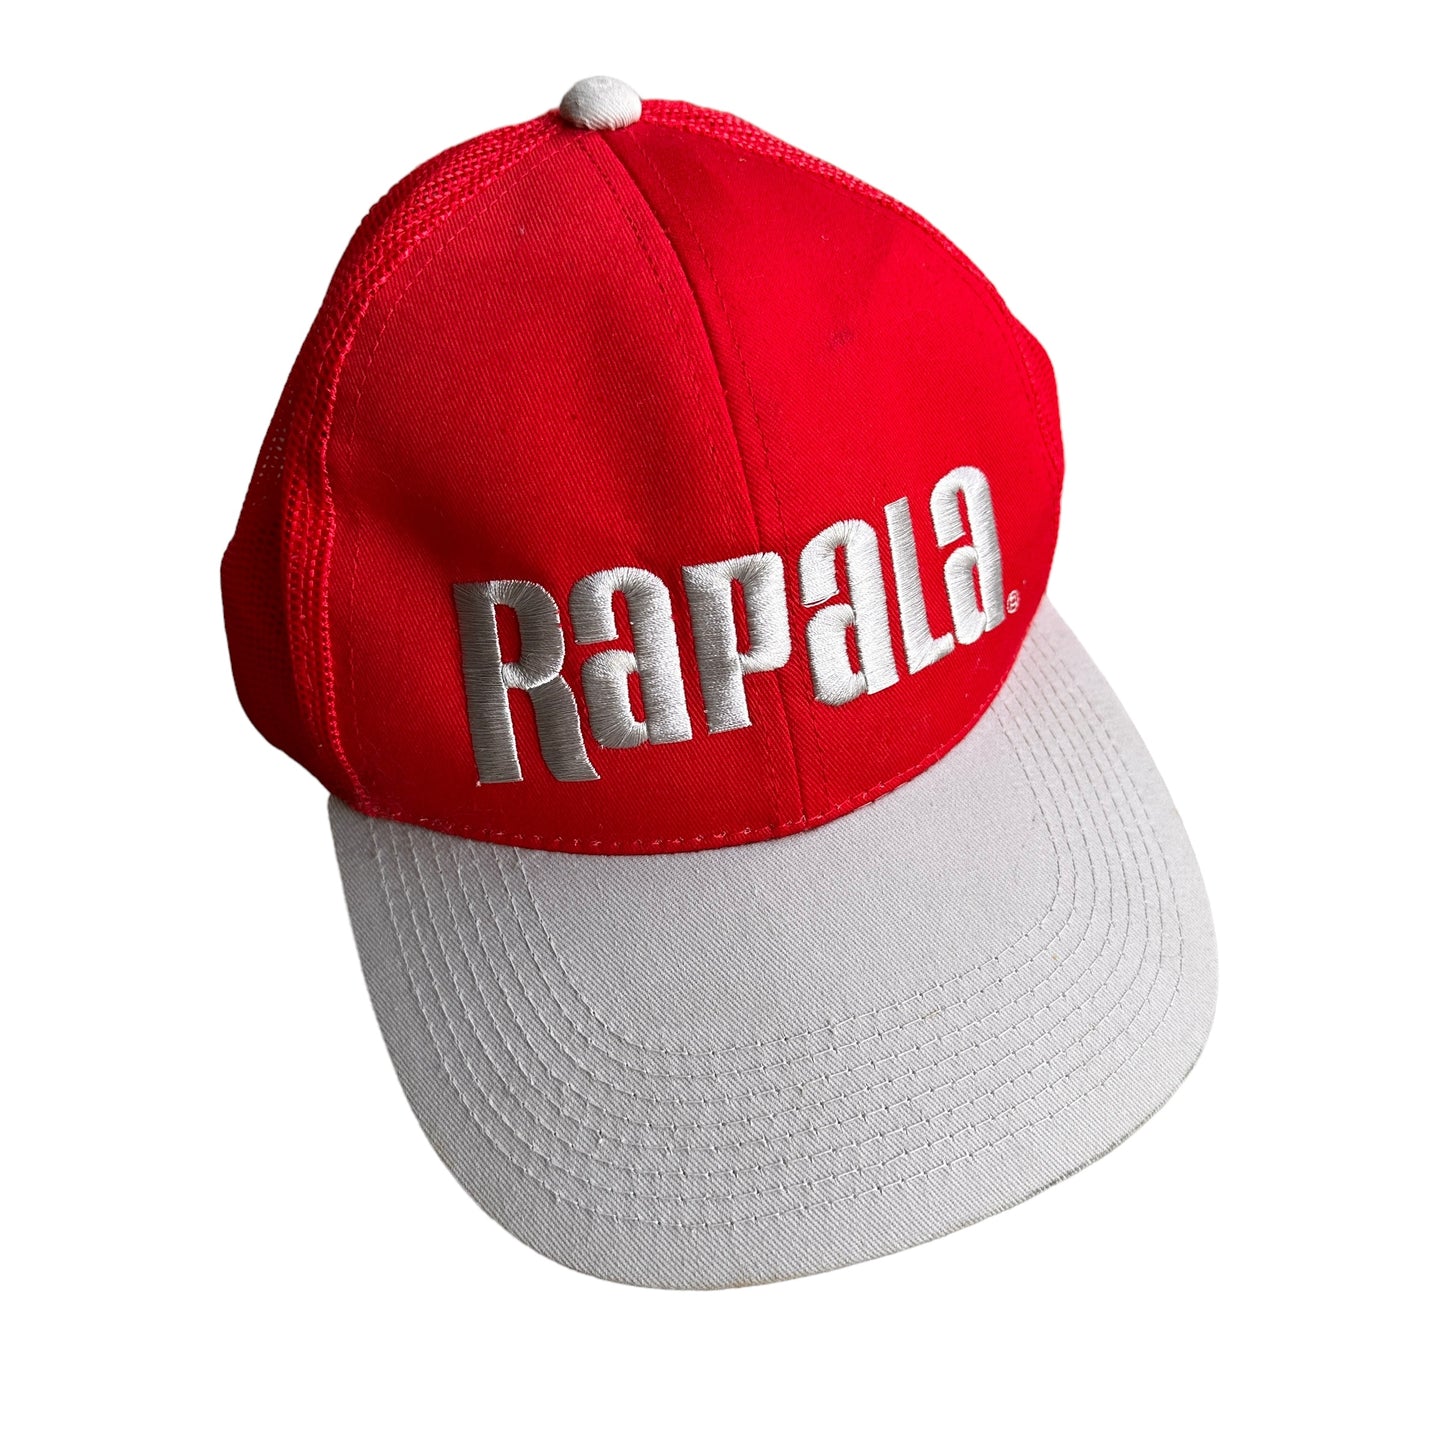 Rapala fishing lure hat